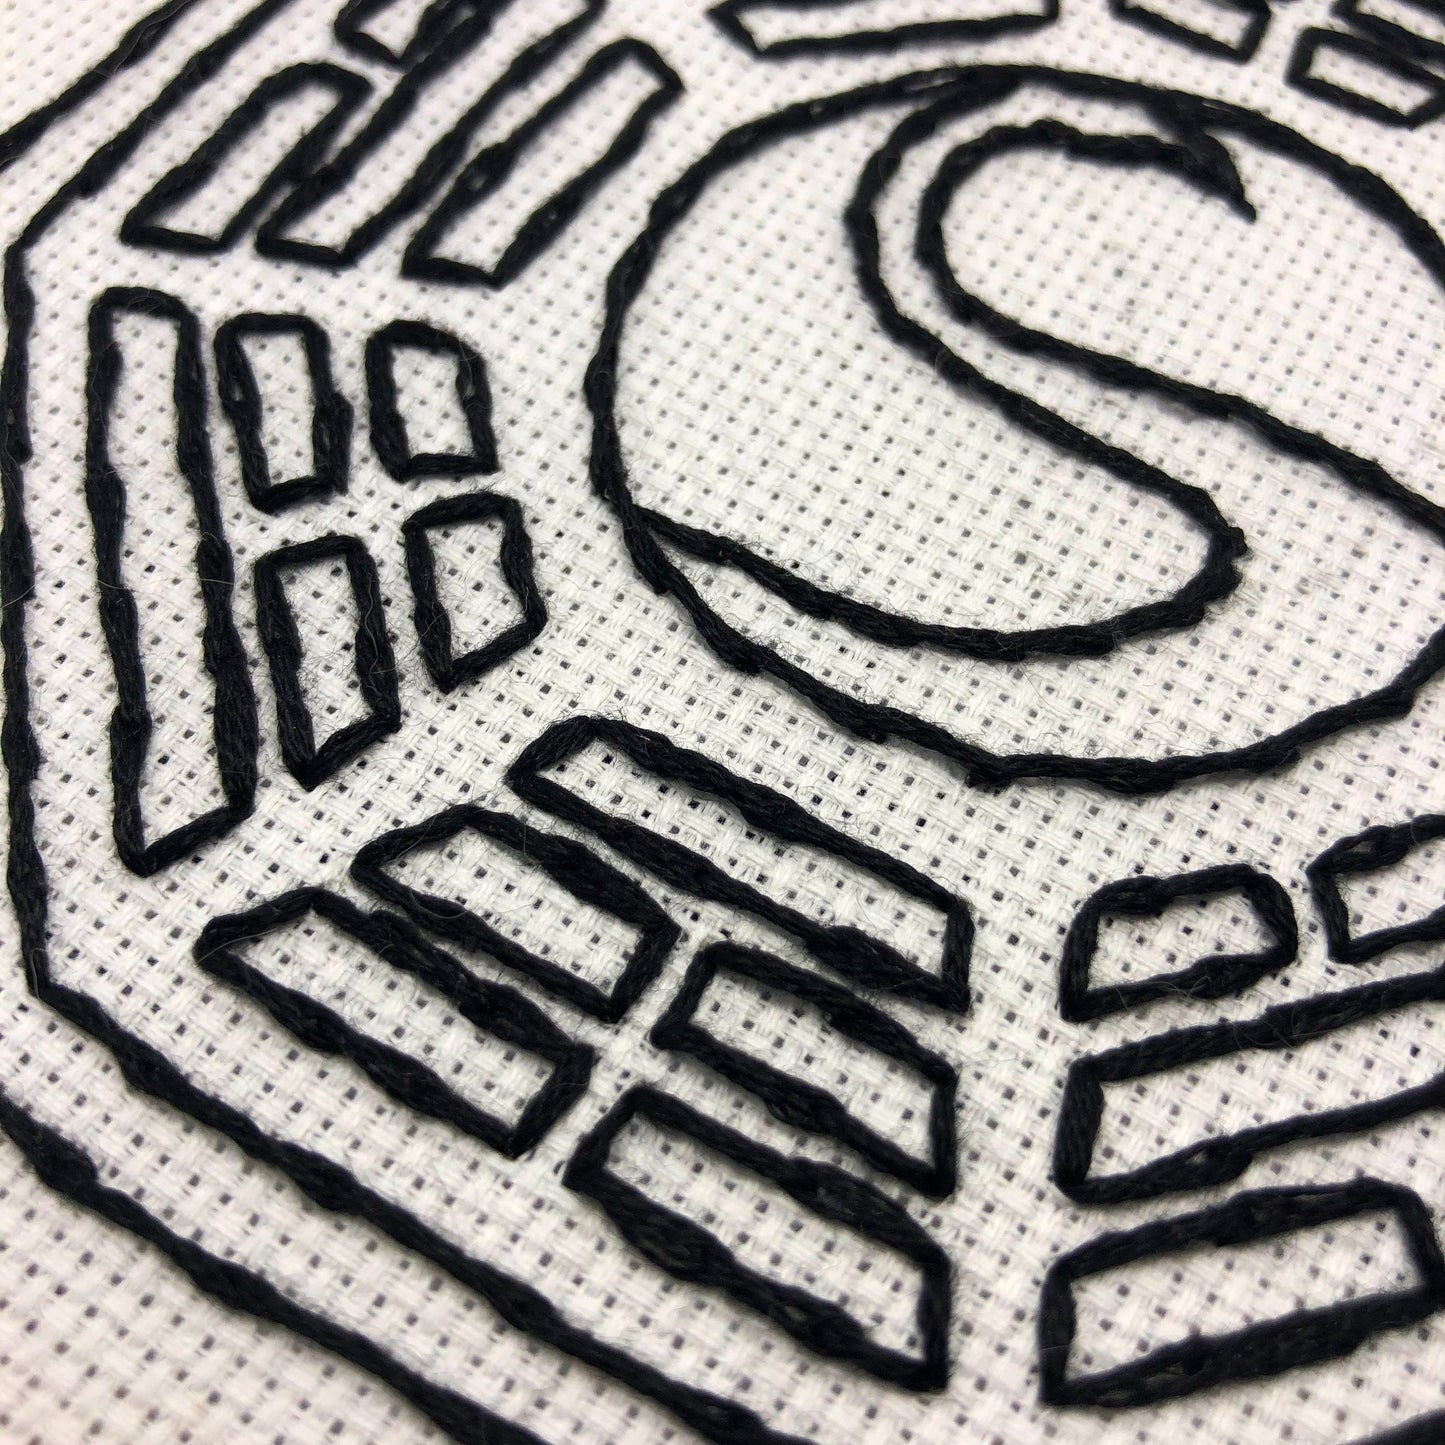 Dharma Initiative embroidery